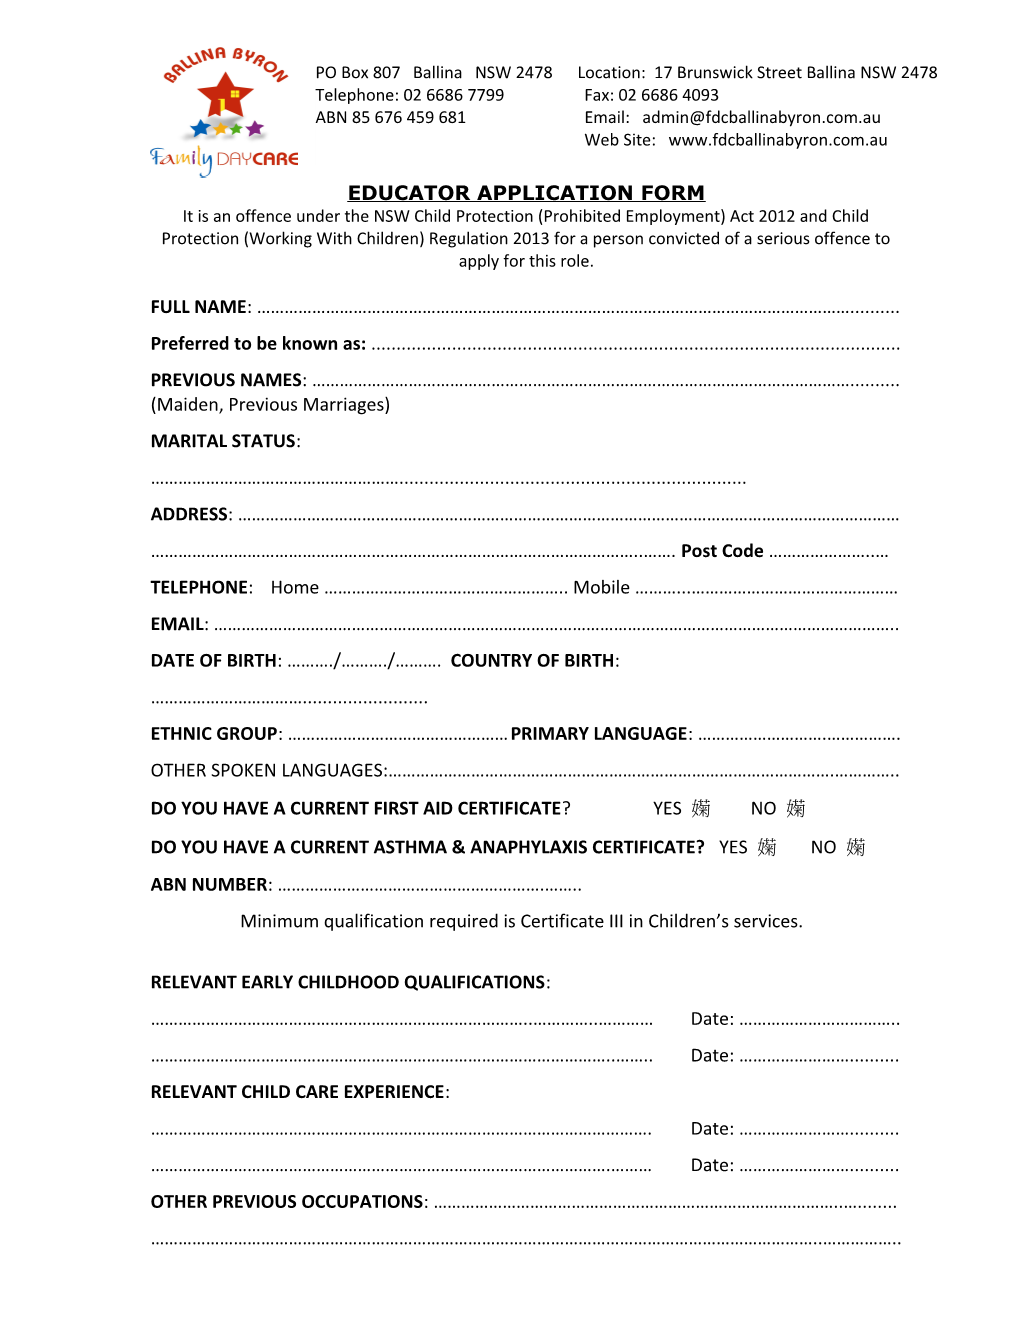 Educator Application Form